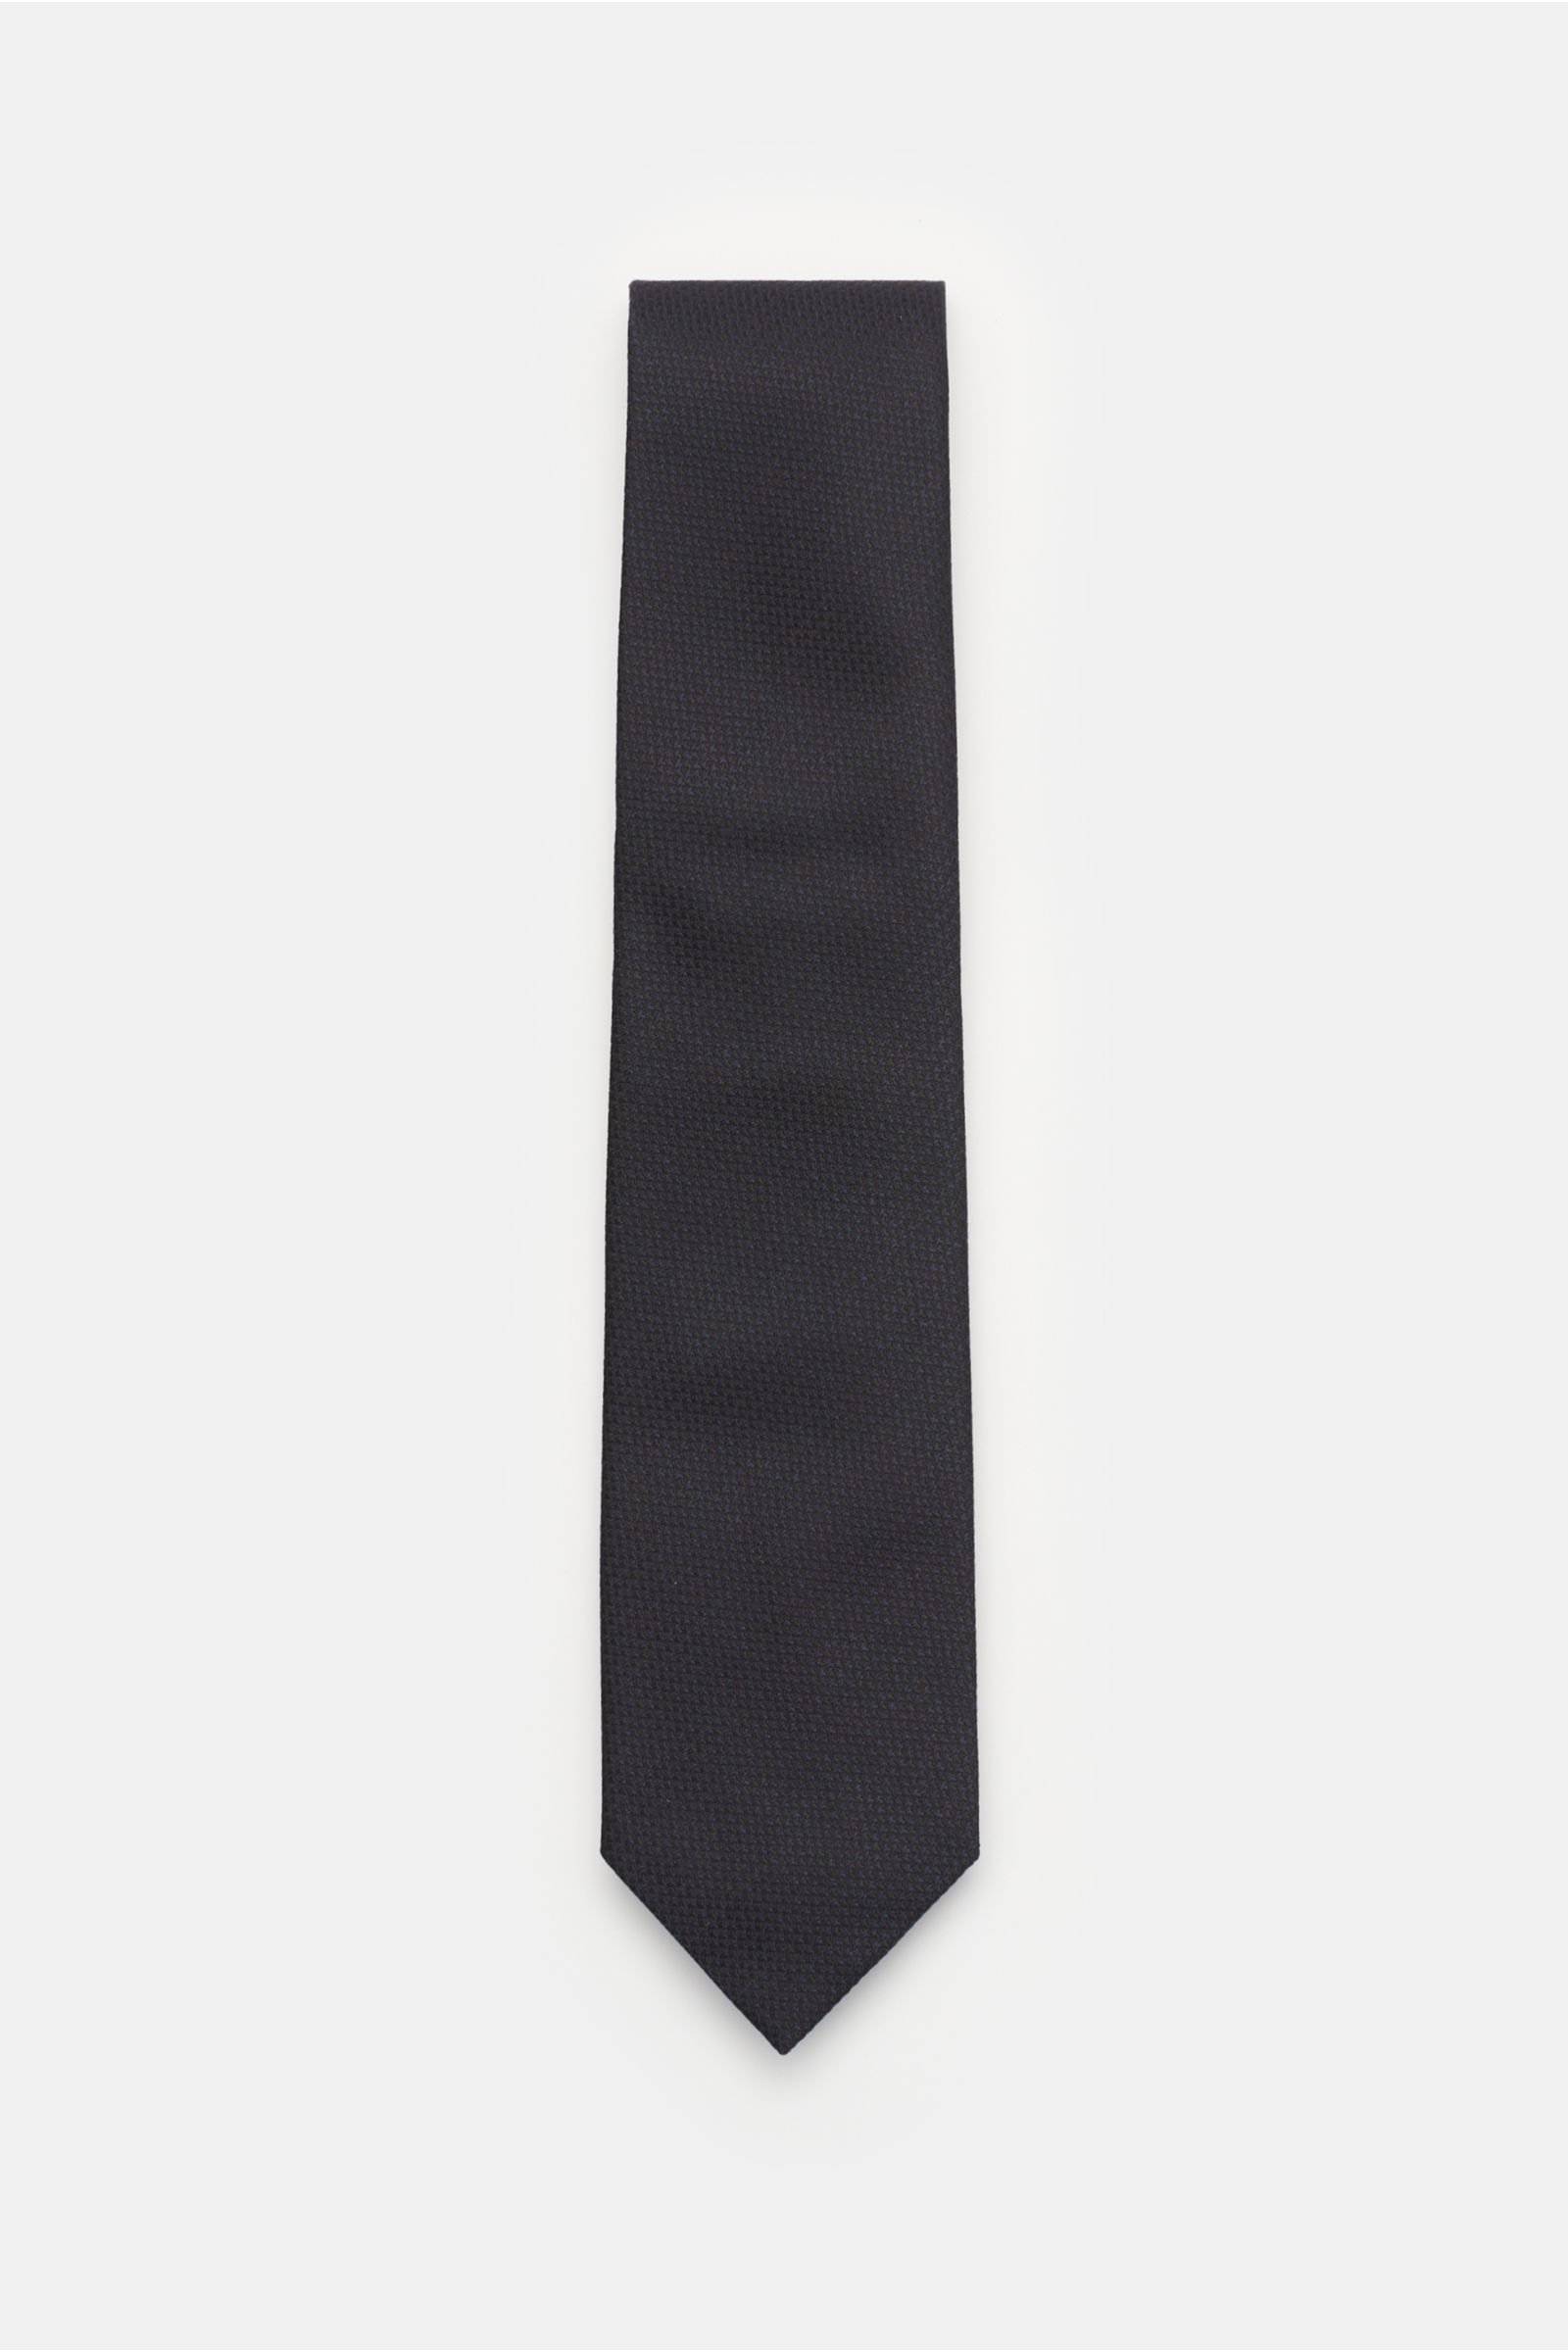 Silk tie black/blue patterned